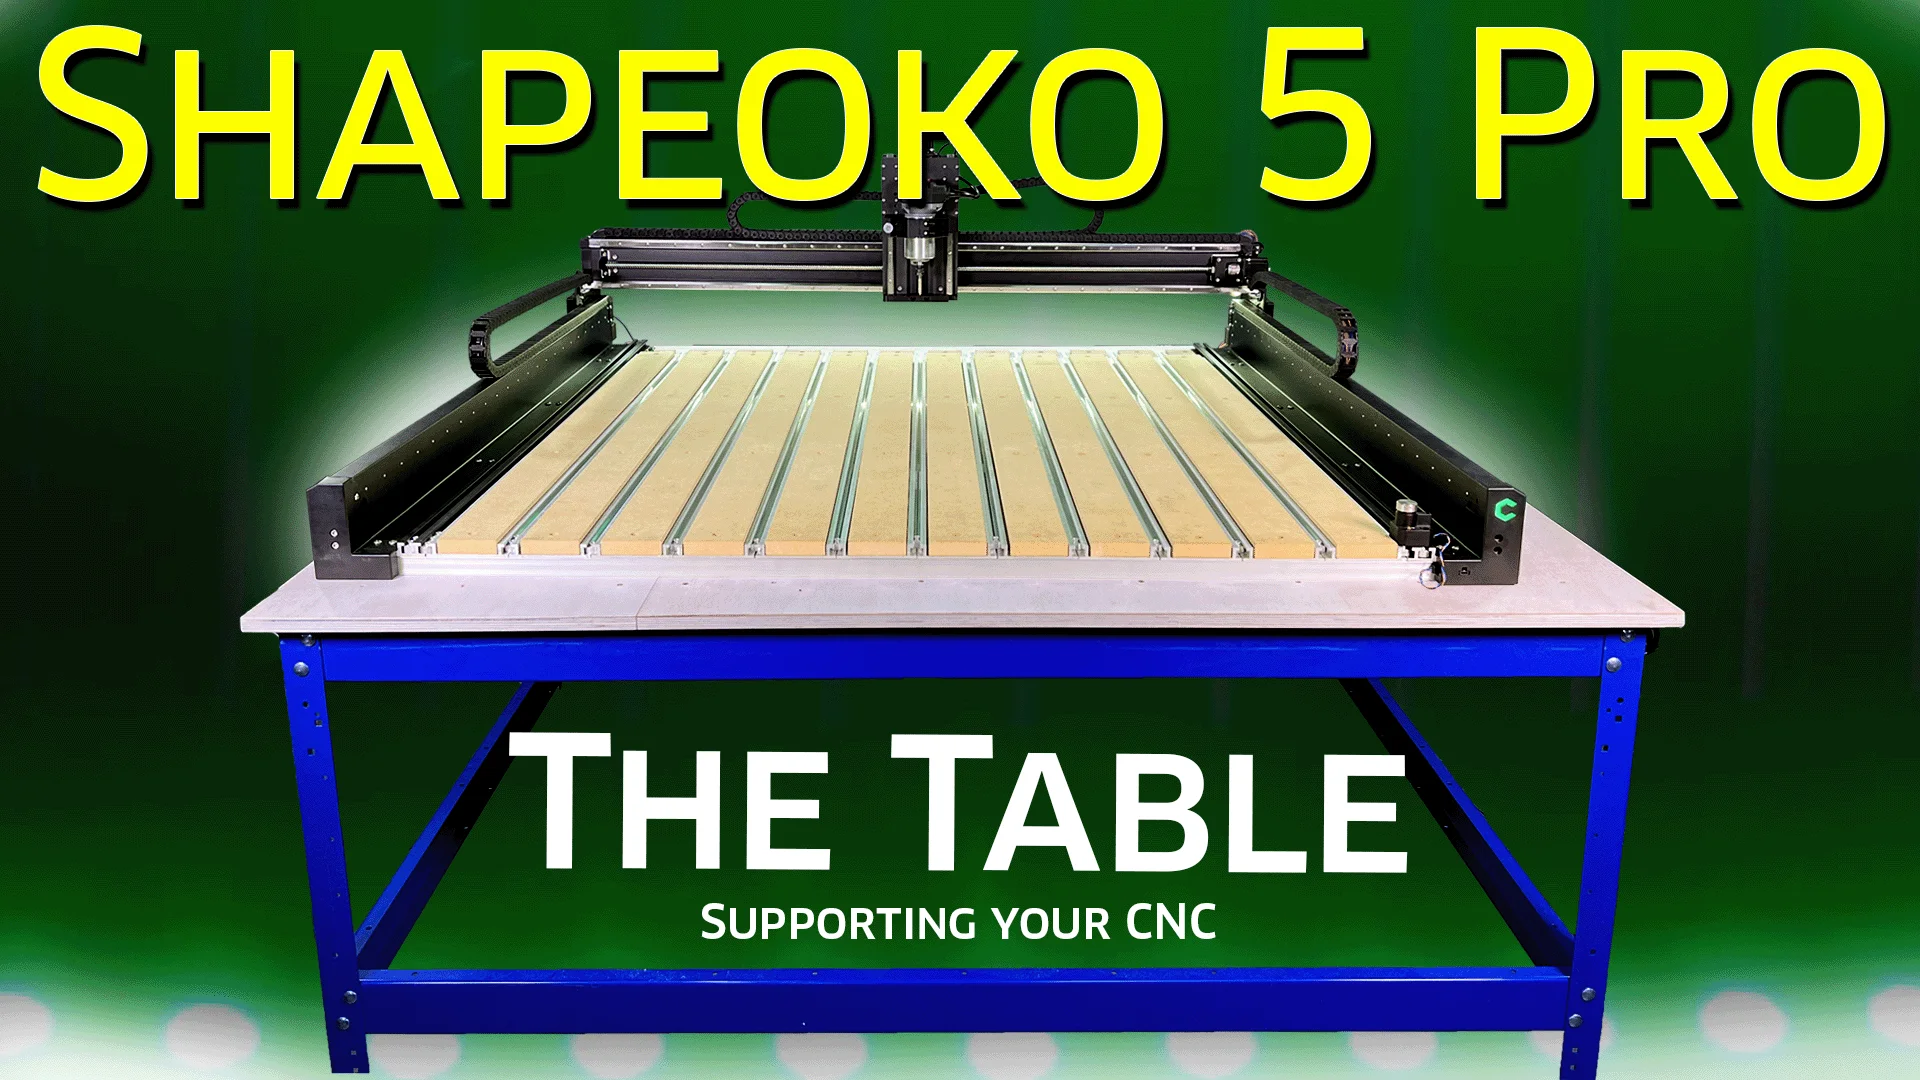 The Table Episode - Shapeoko 5 Pro - Video 6 on Vimeo